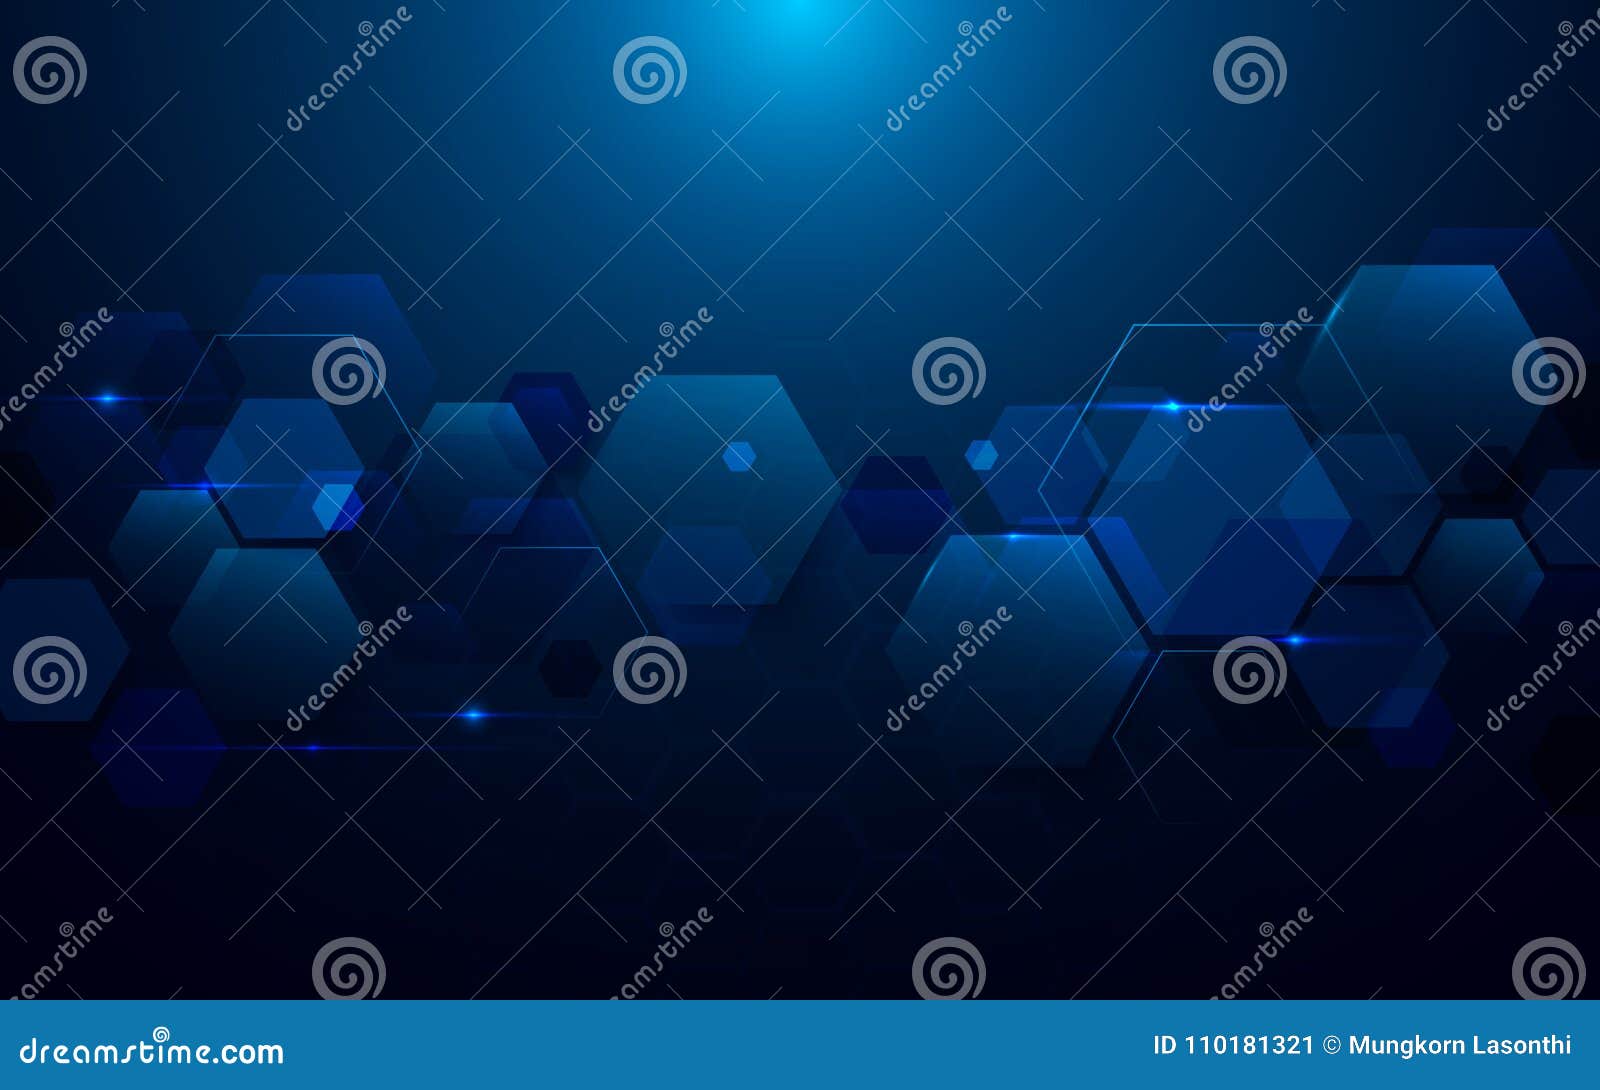 blue abstract hexagons technology digital hi tech concept background